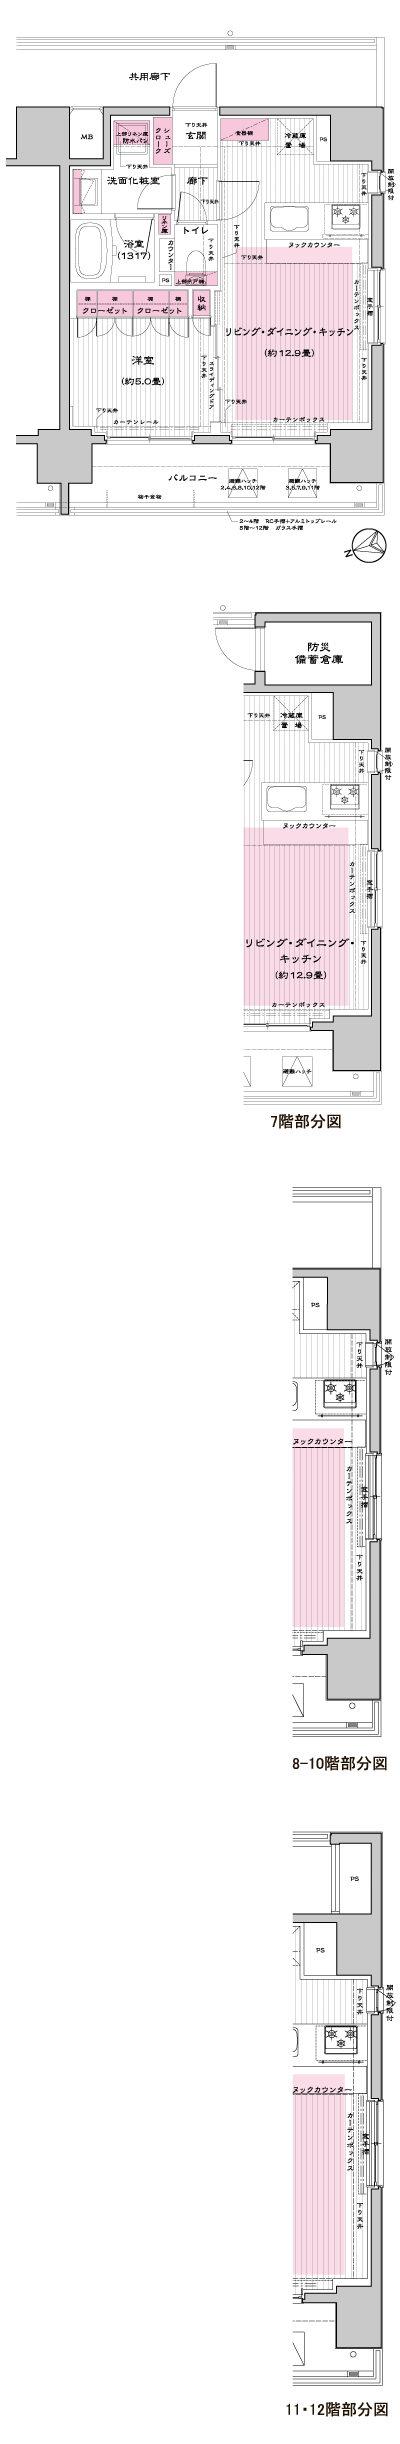 Floor: 1LDK, occupied area: 43.28 sq m, Price: 34,500,000 yen, now on sale